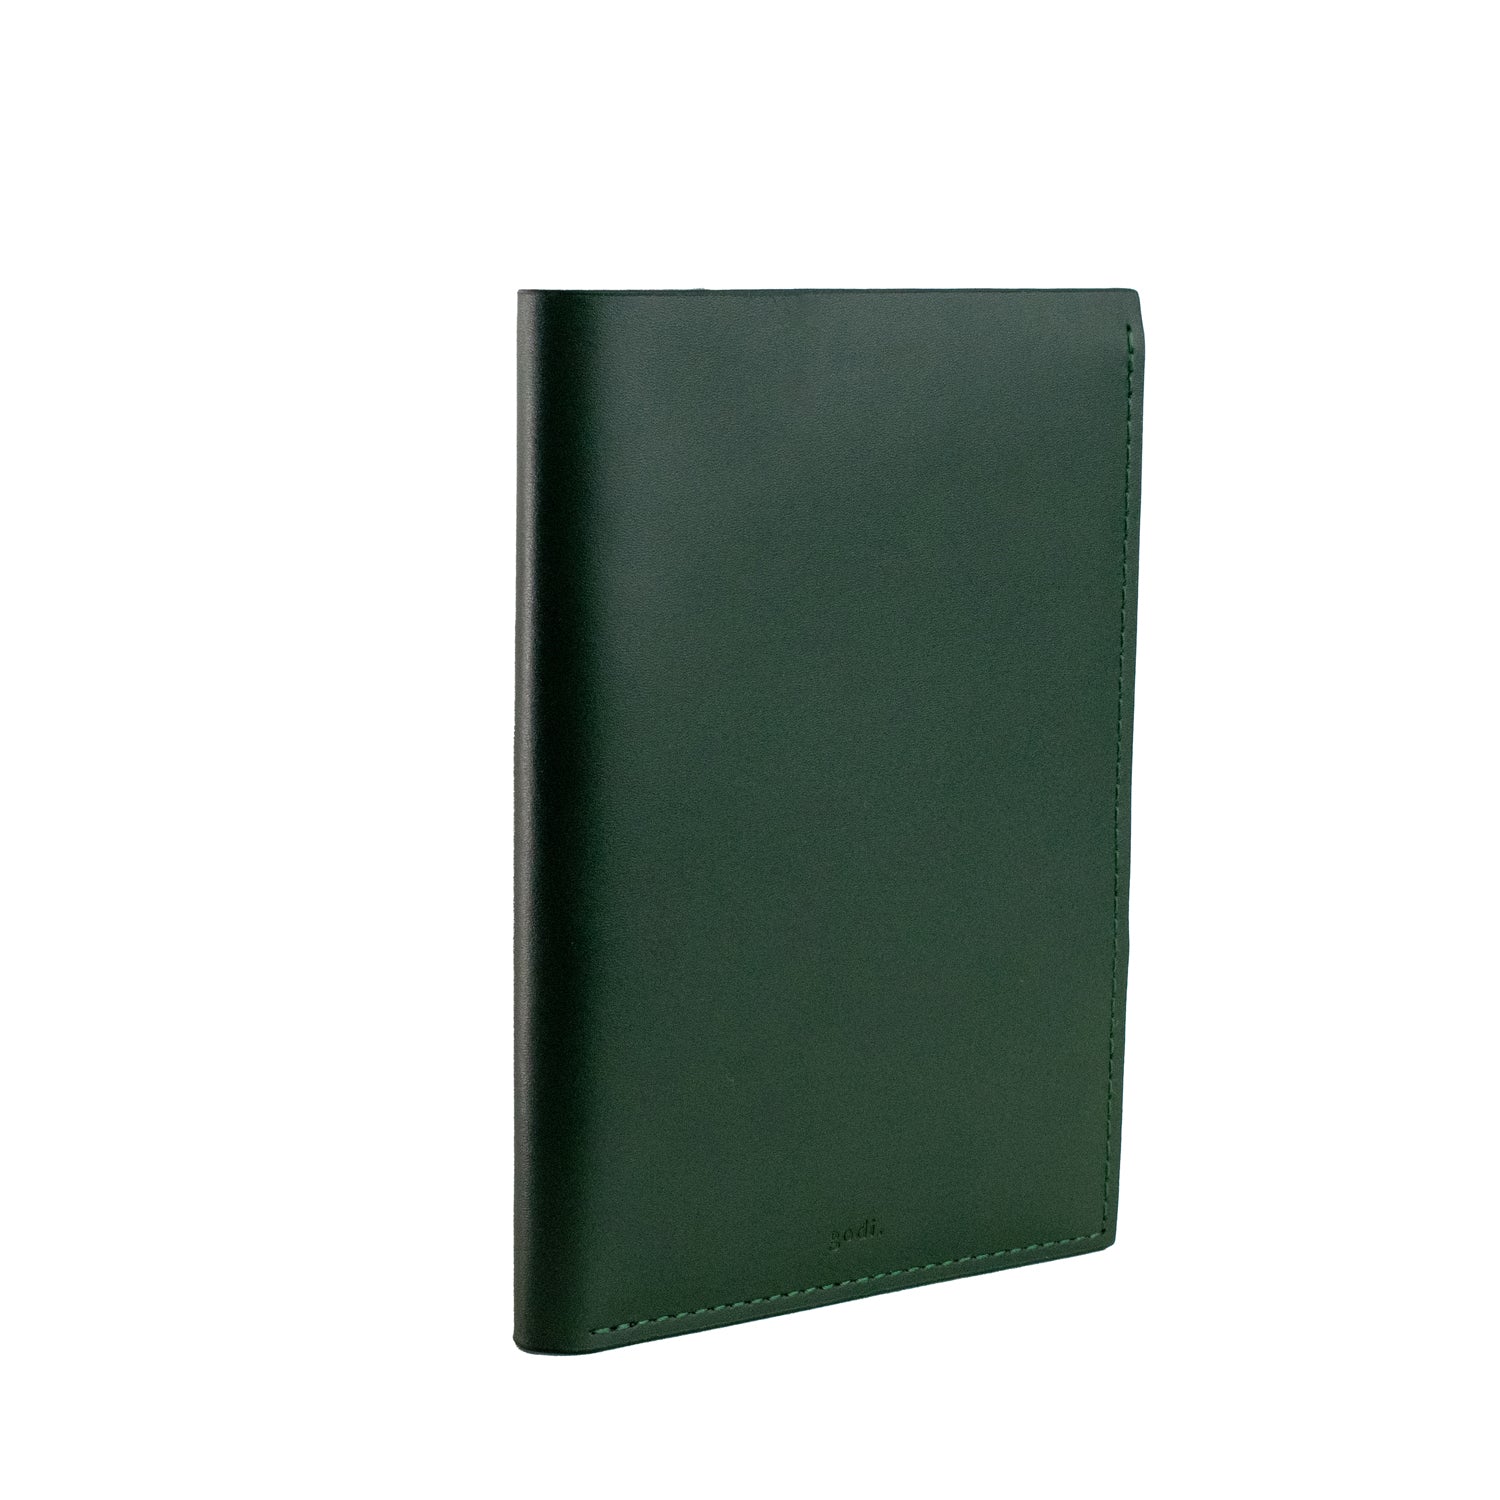 Passport Cover in Dark Green